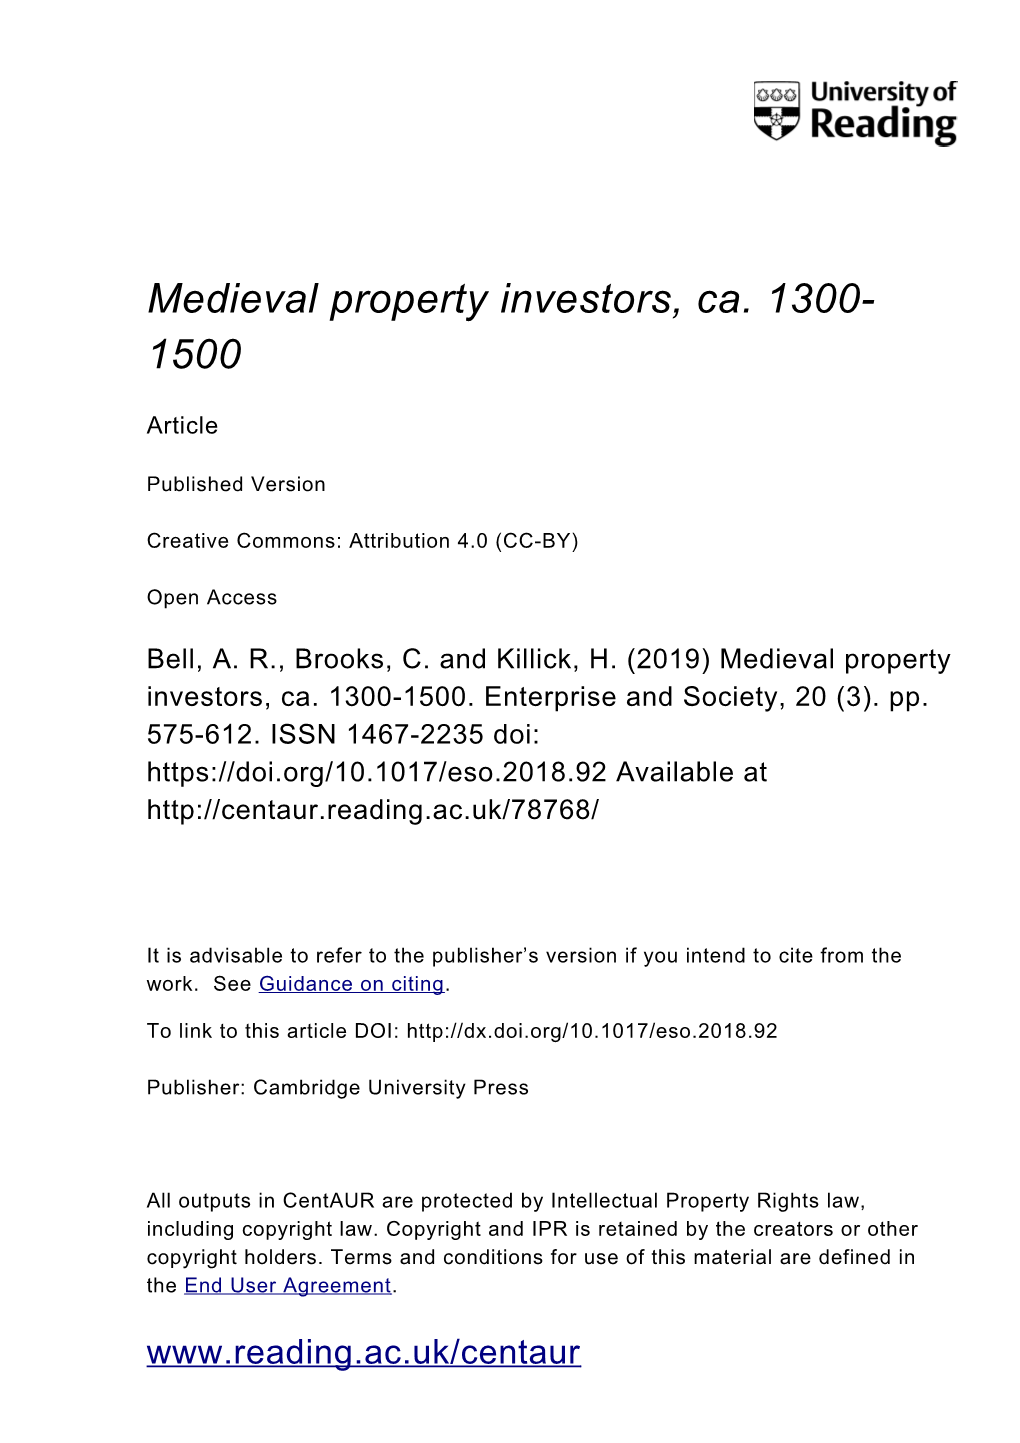 Medieval Property Investors, Ca. 1300- 1500